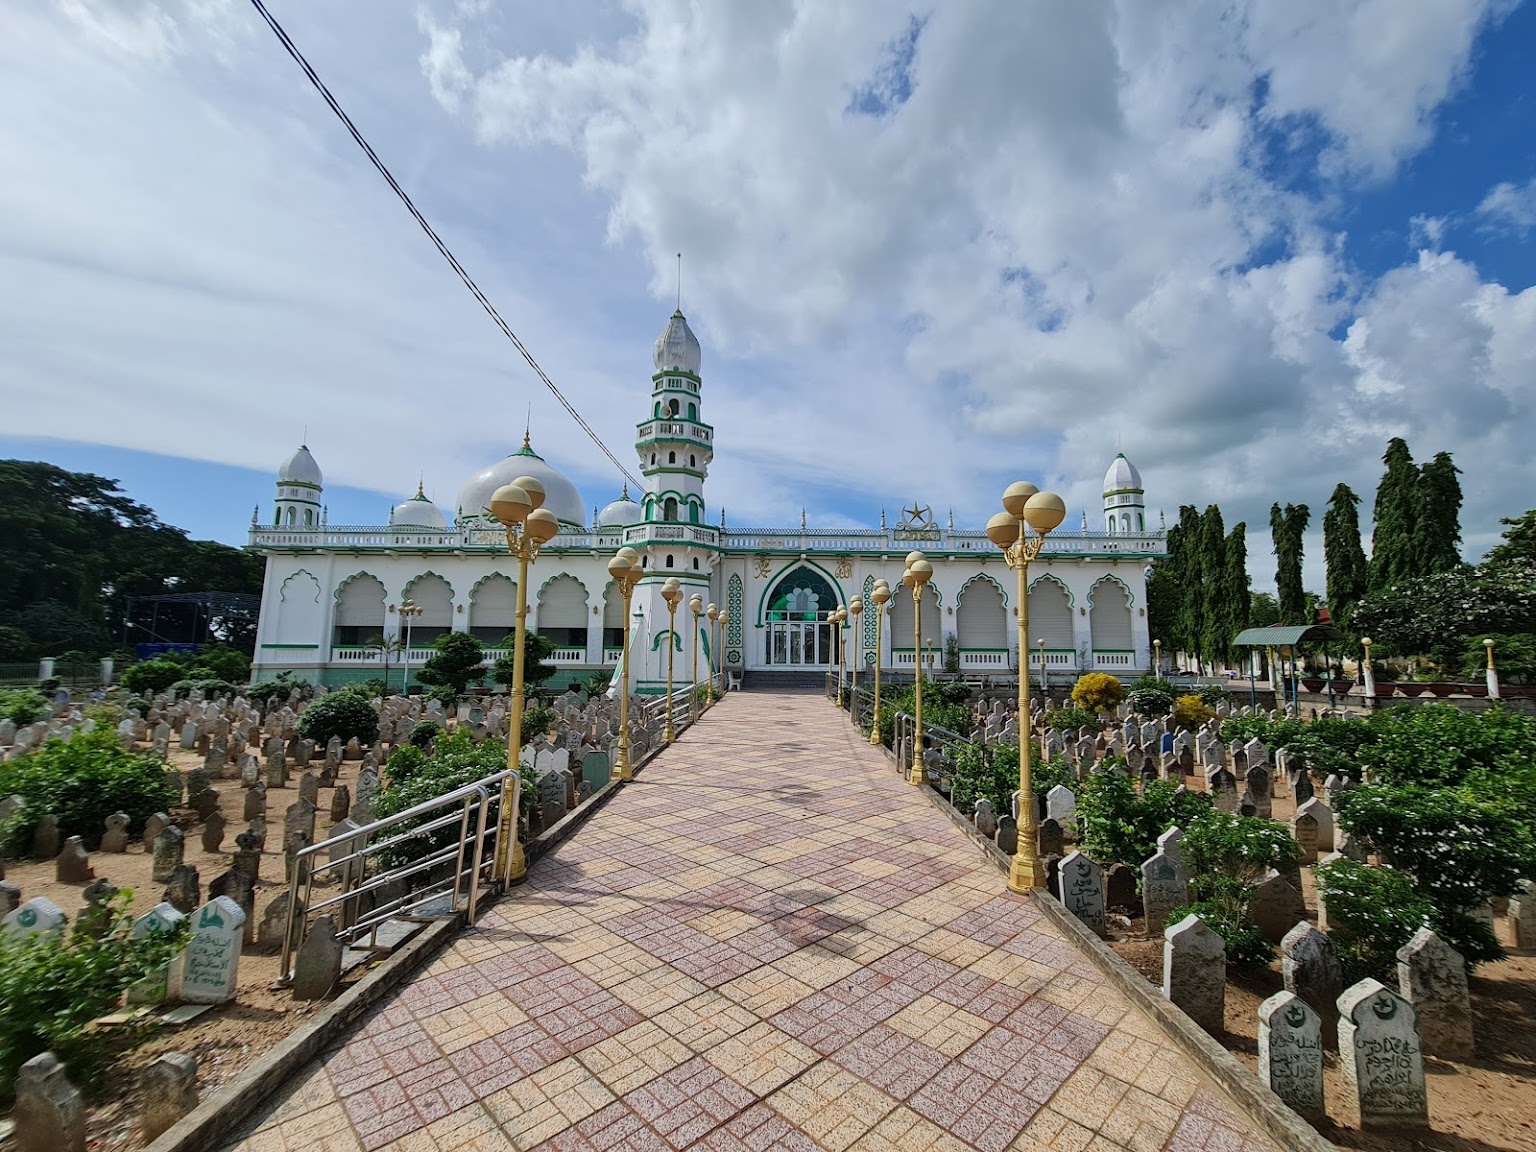 Masjid Jamiul Azhar Mosque Cemetery in An Giang